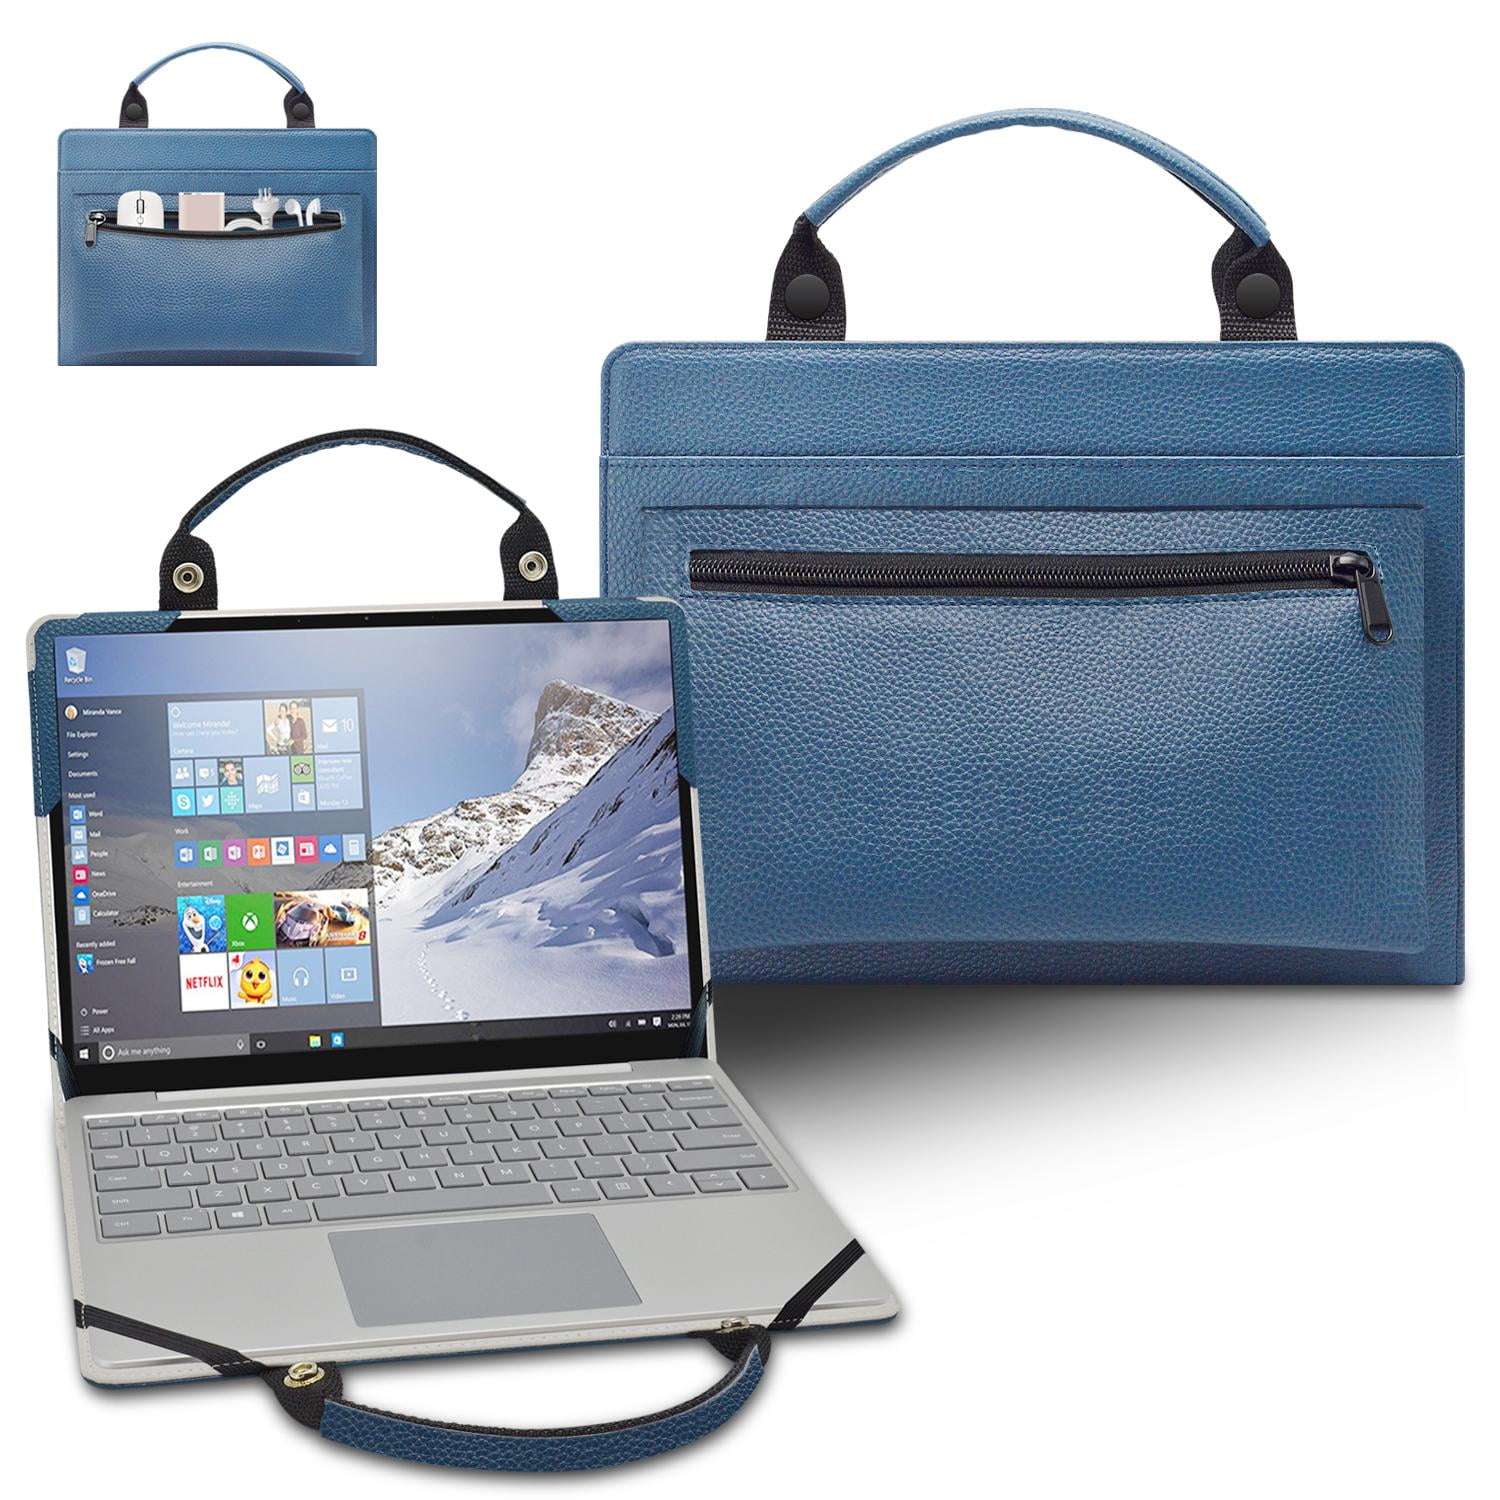 Carrying Bag Sleeve Case For 13.3" HP Pavilion Spectre EliteBook Notebook Laptop 